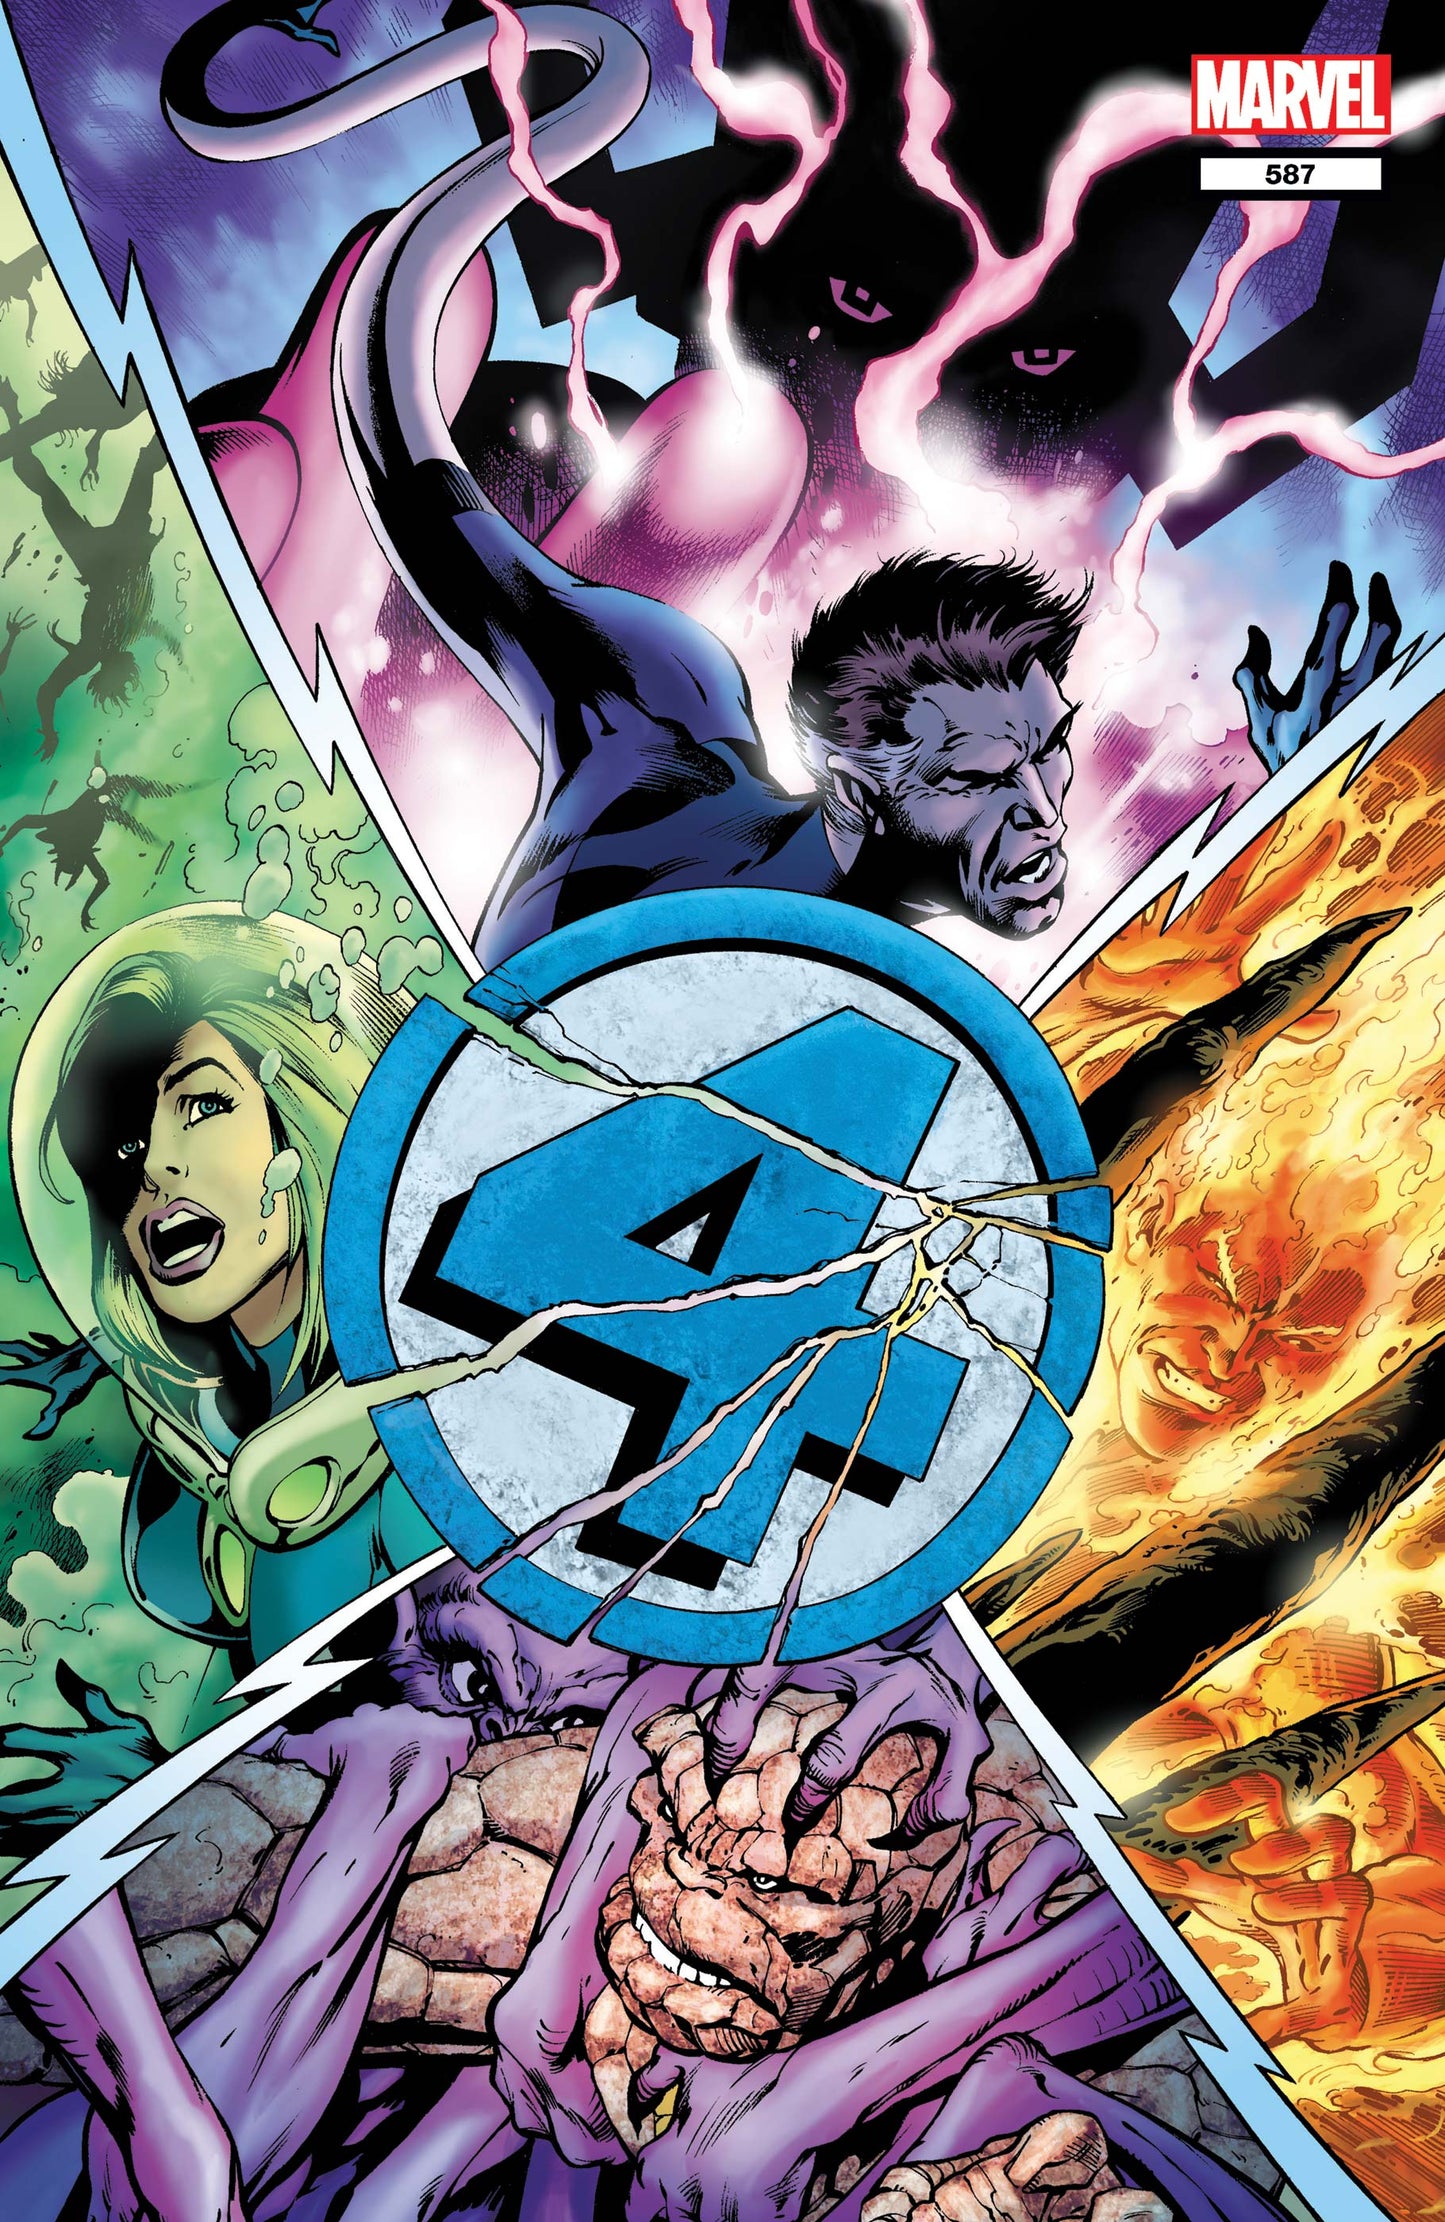 Fantastic Four #587